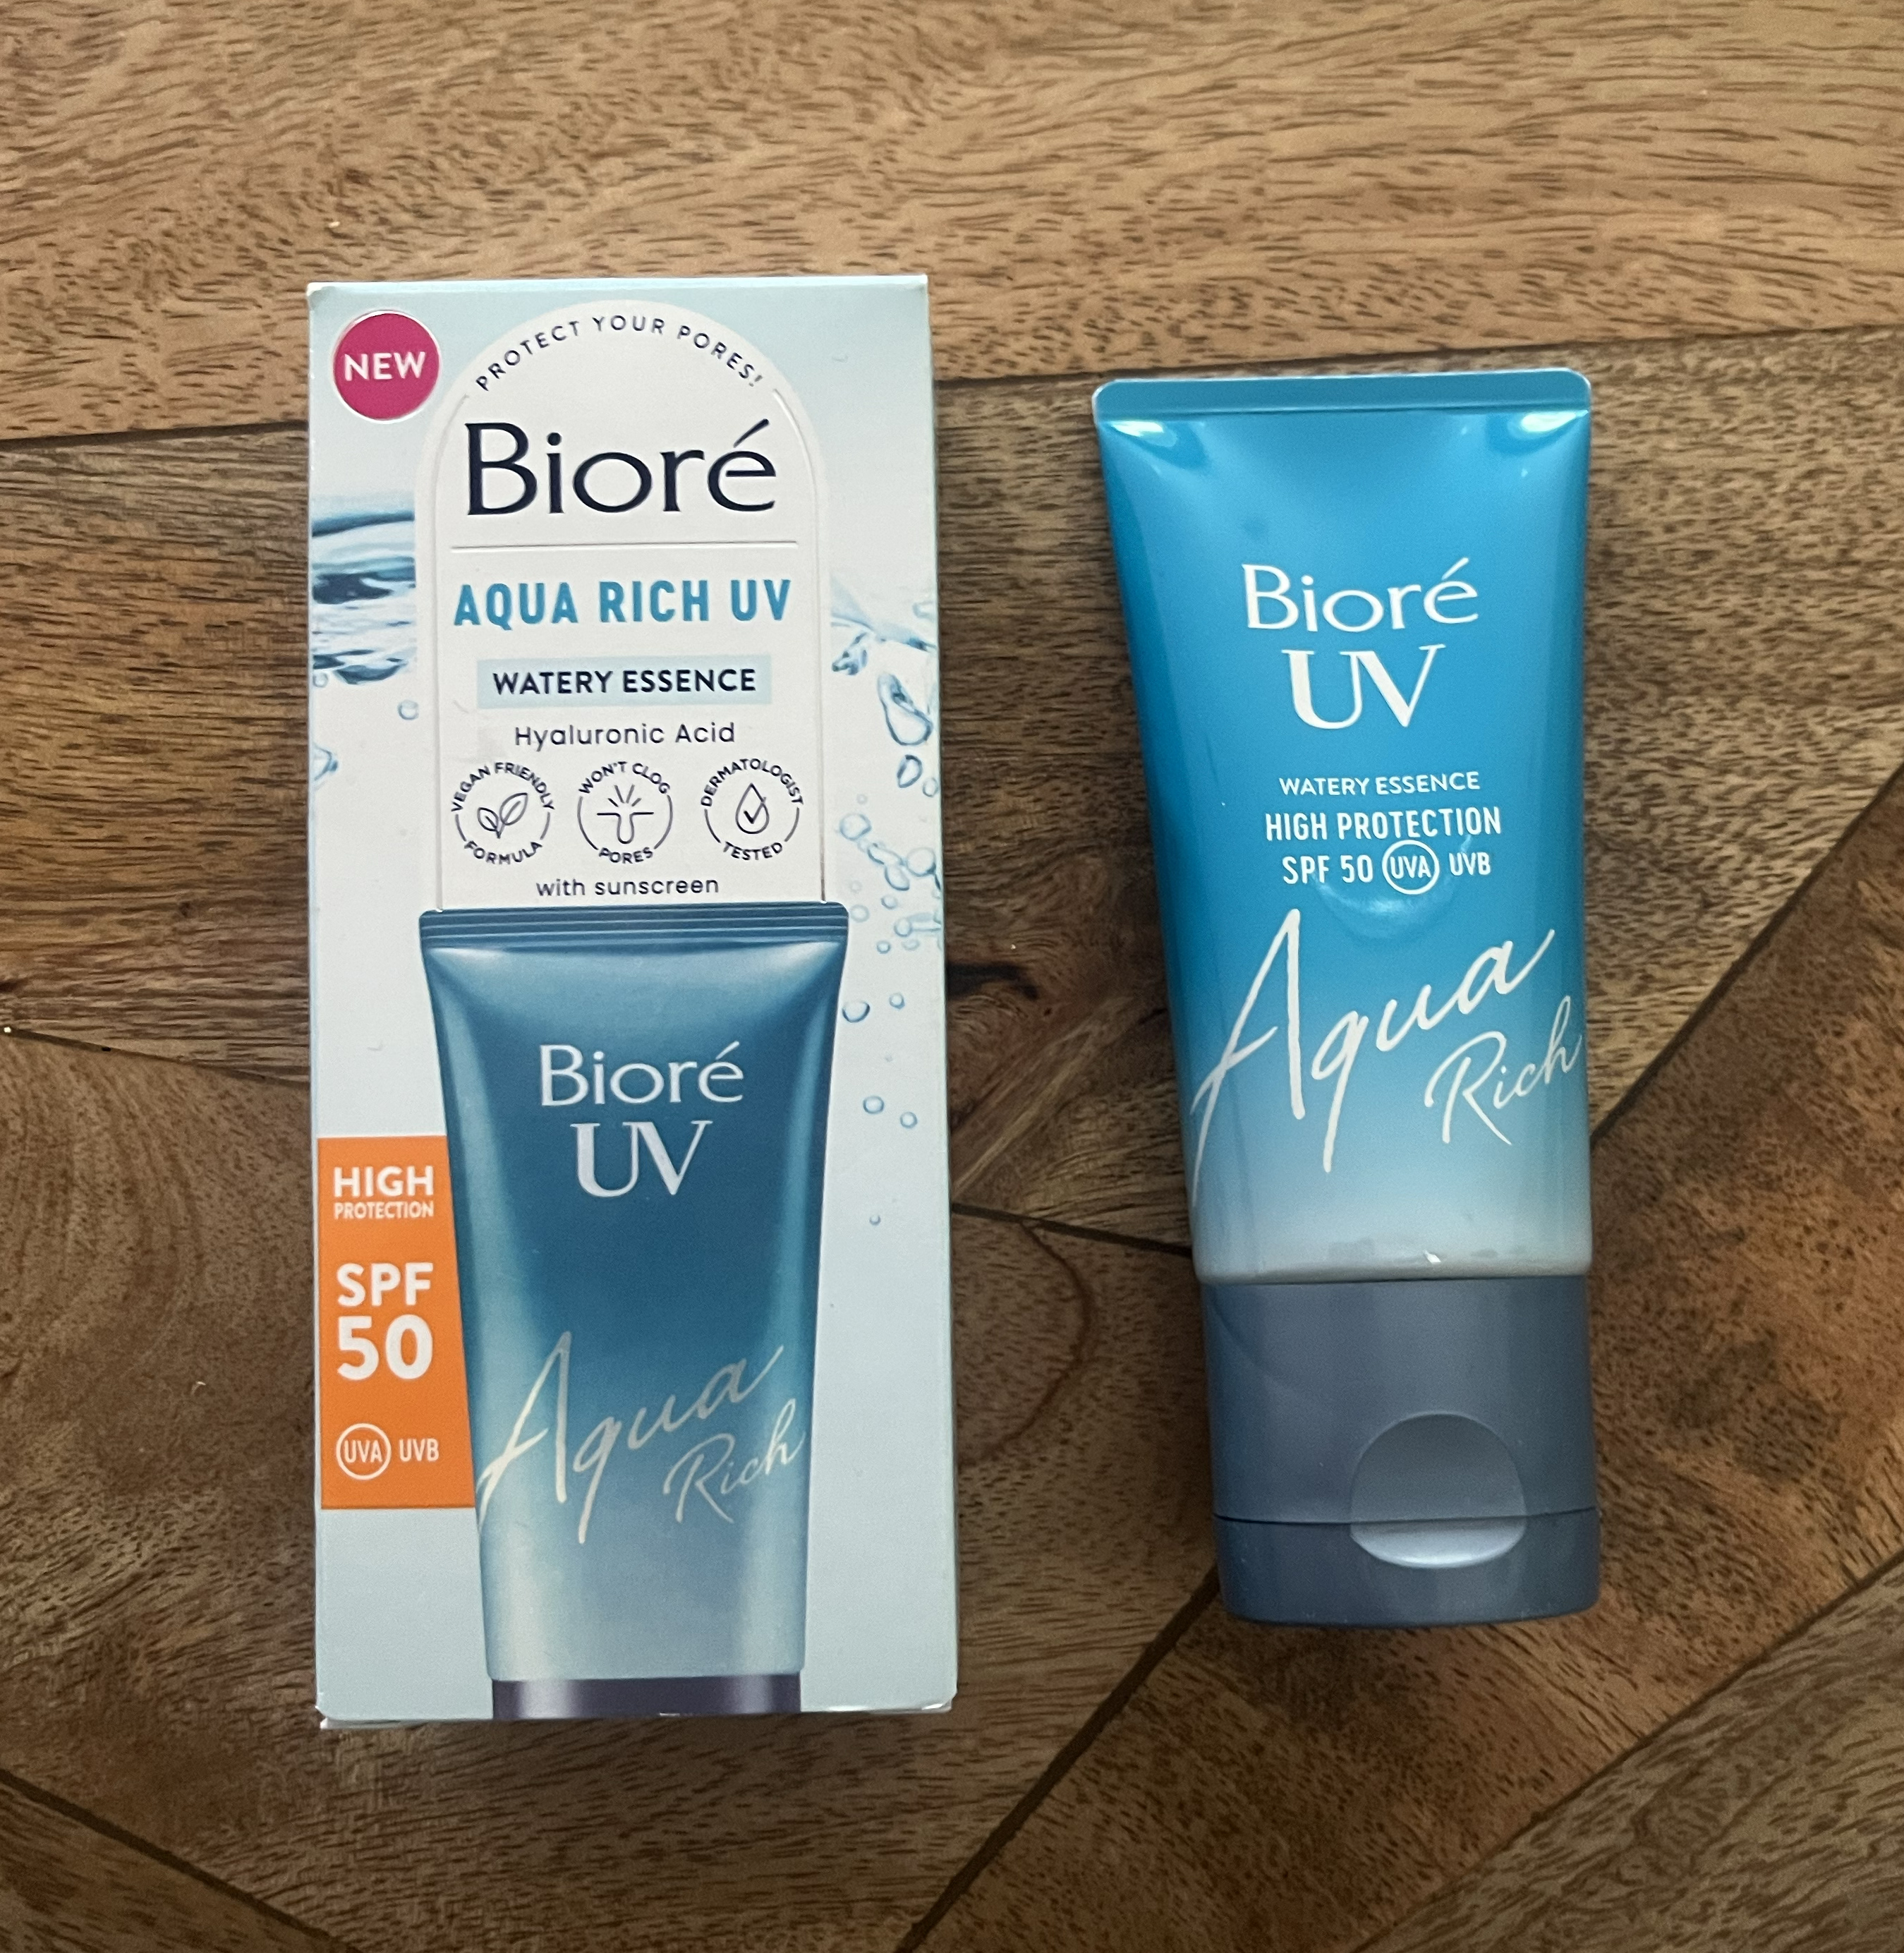 Biore UV is moisturising for dry skin.